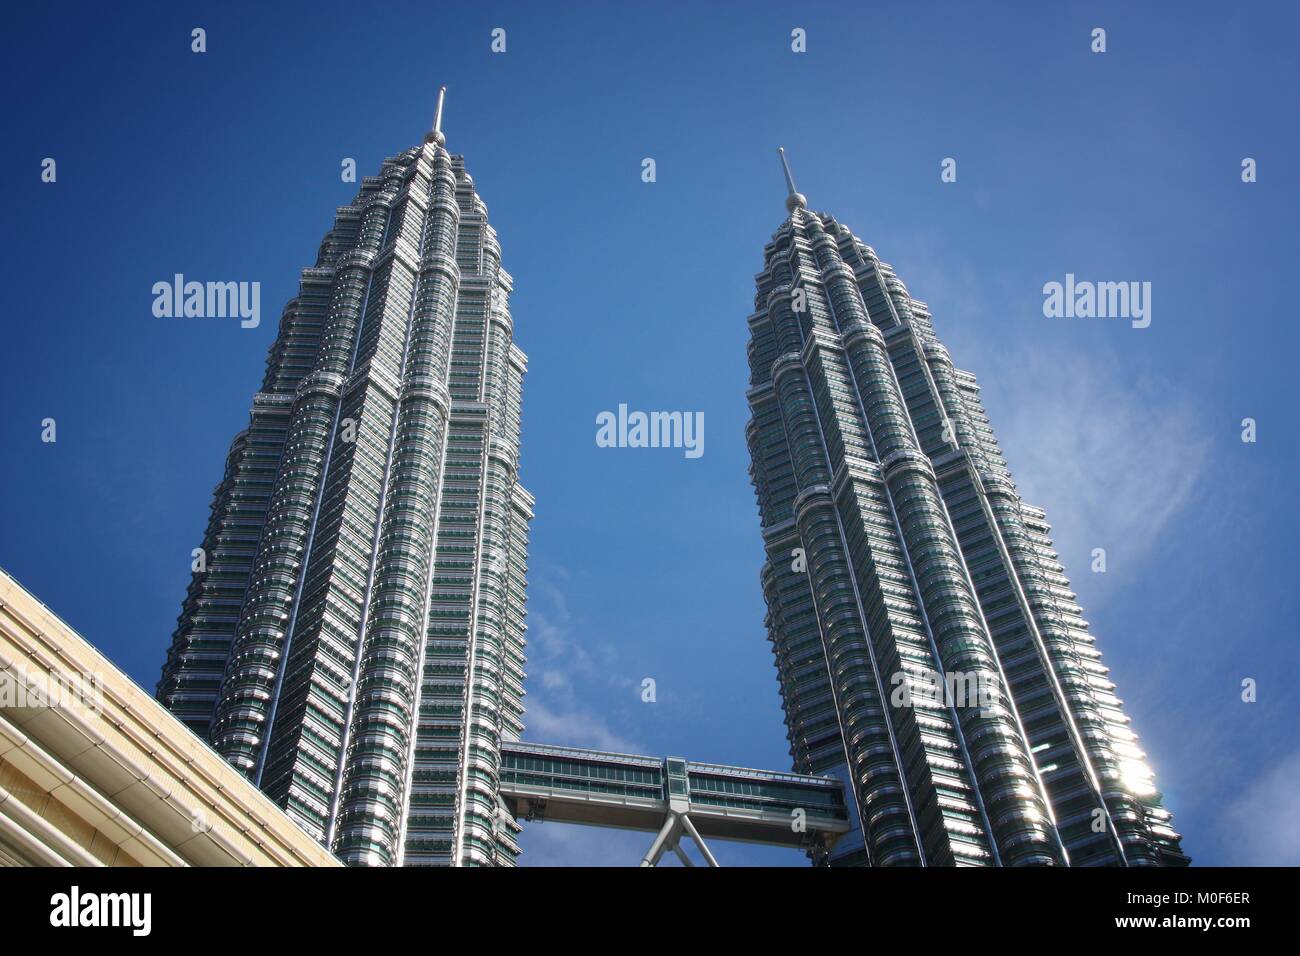 KUALA LUMPUR, Malaysia - 29. MÄRZ 2009: Petronas Towers in Kuala Lumpur, Malaysia. Petronas ist der 7. höchste Gebäude der Welt, wie der Stockfoto